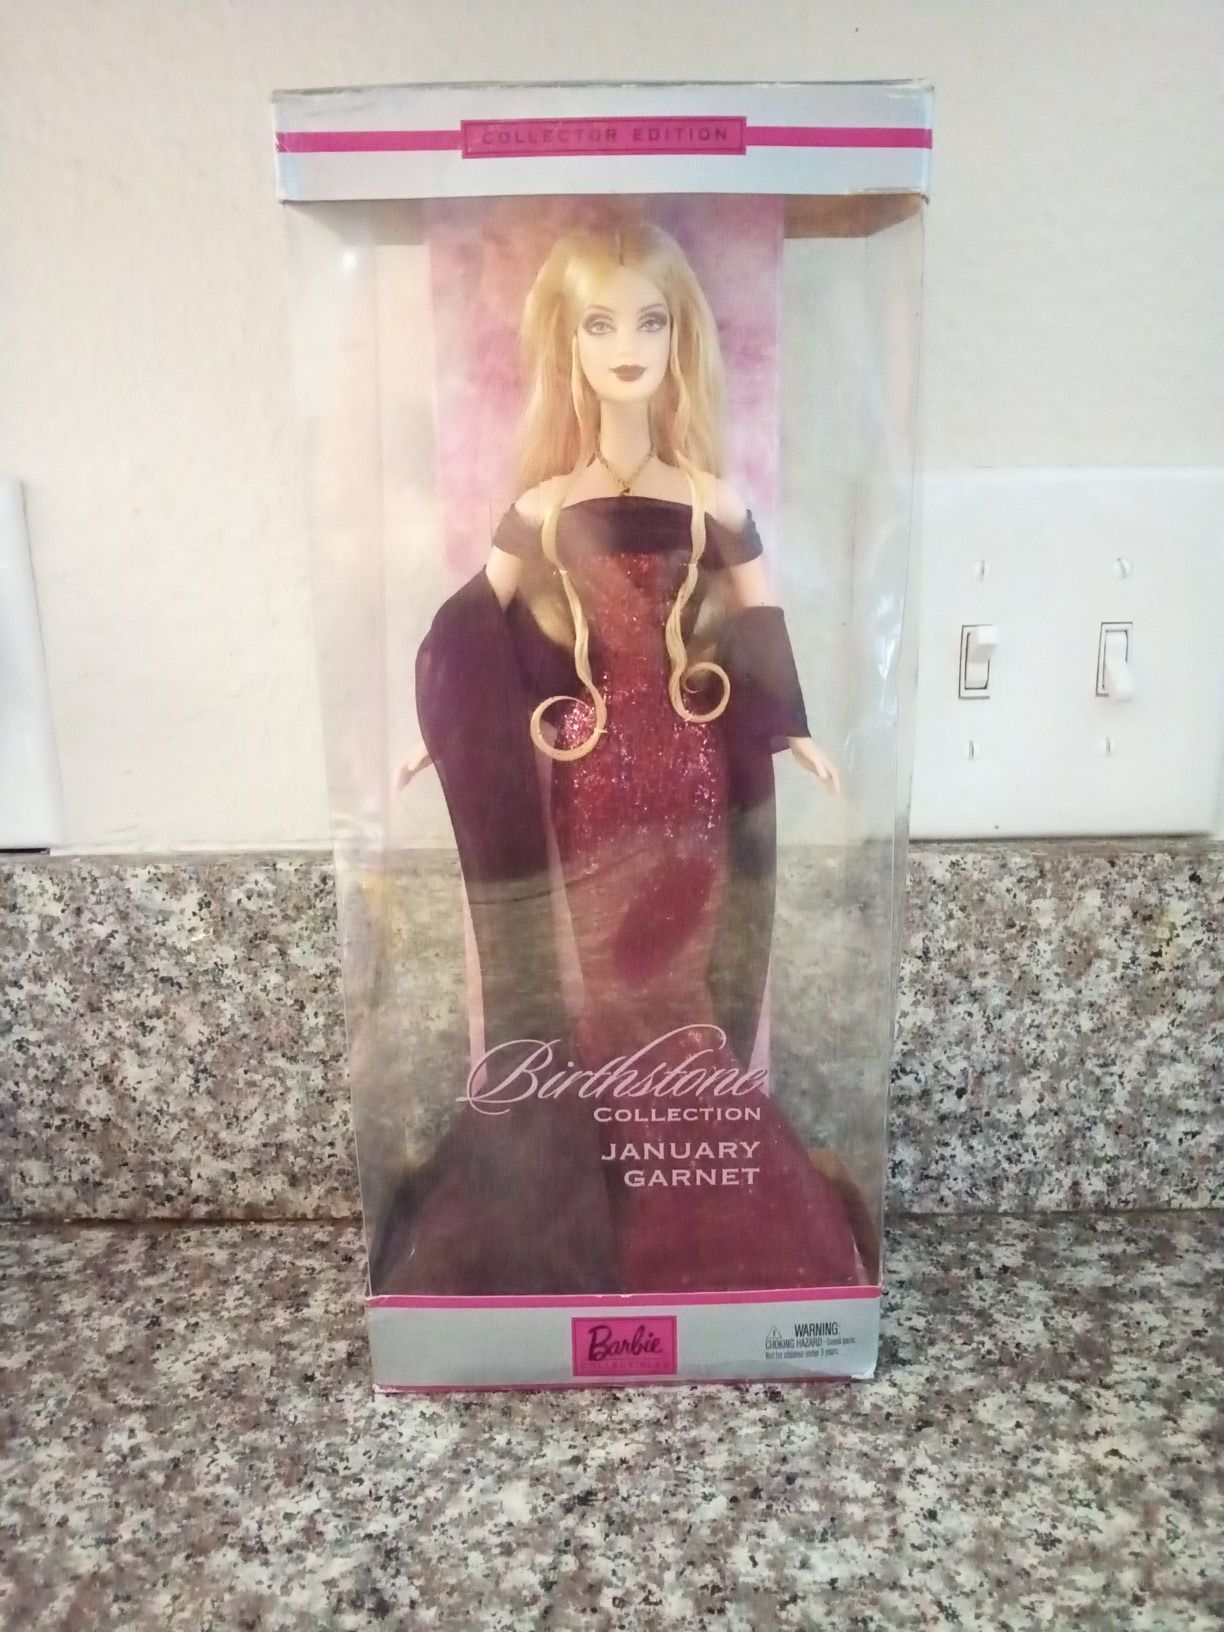 Barbie birthstone January garnet collection